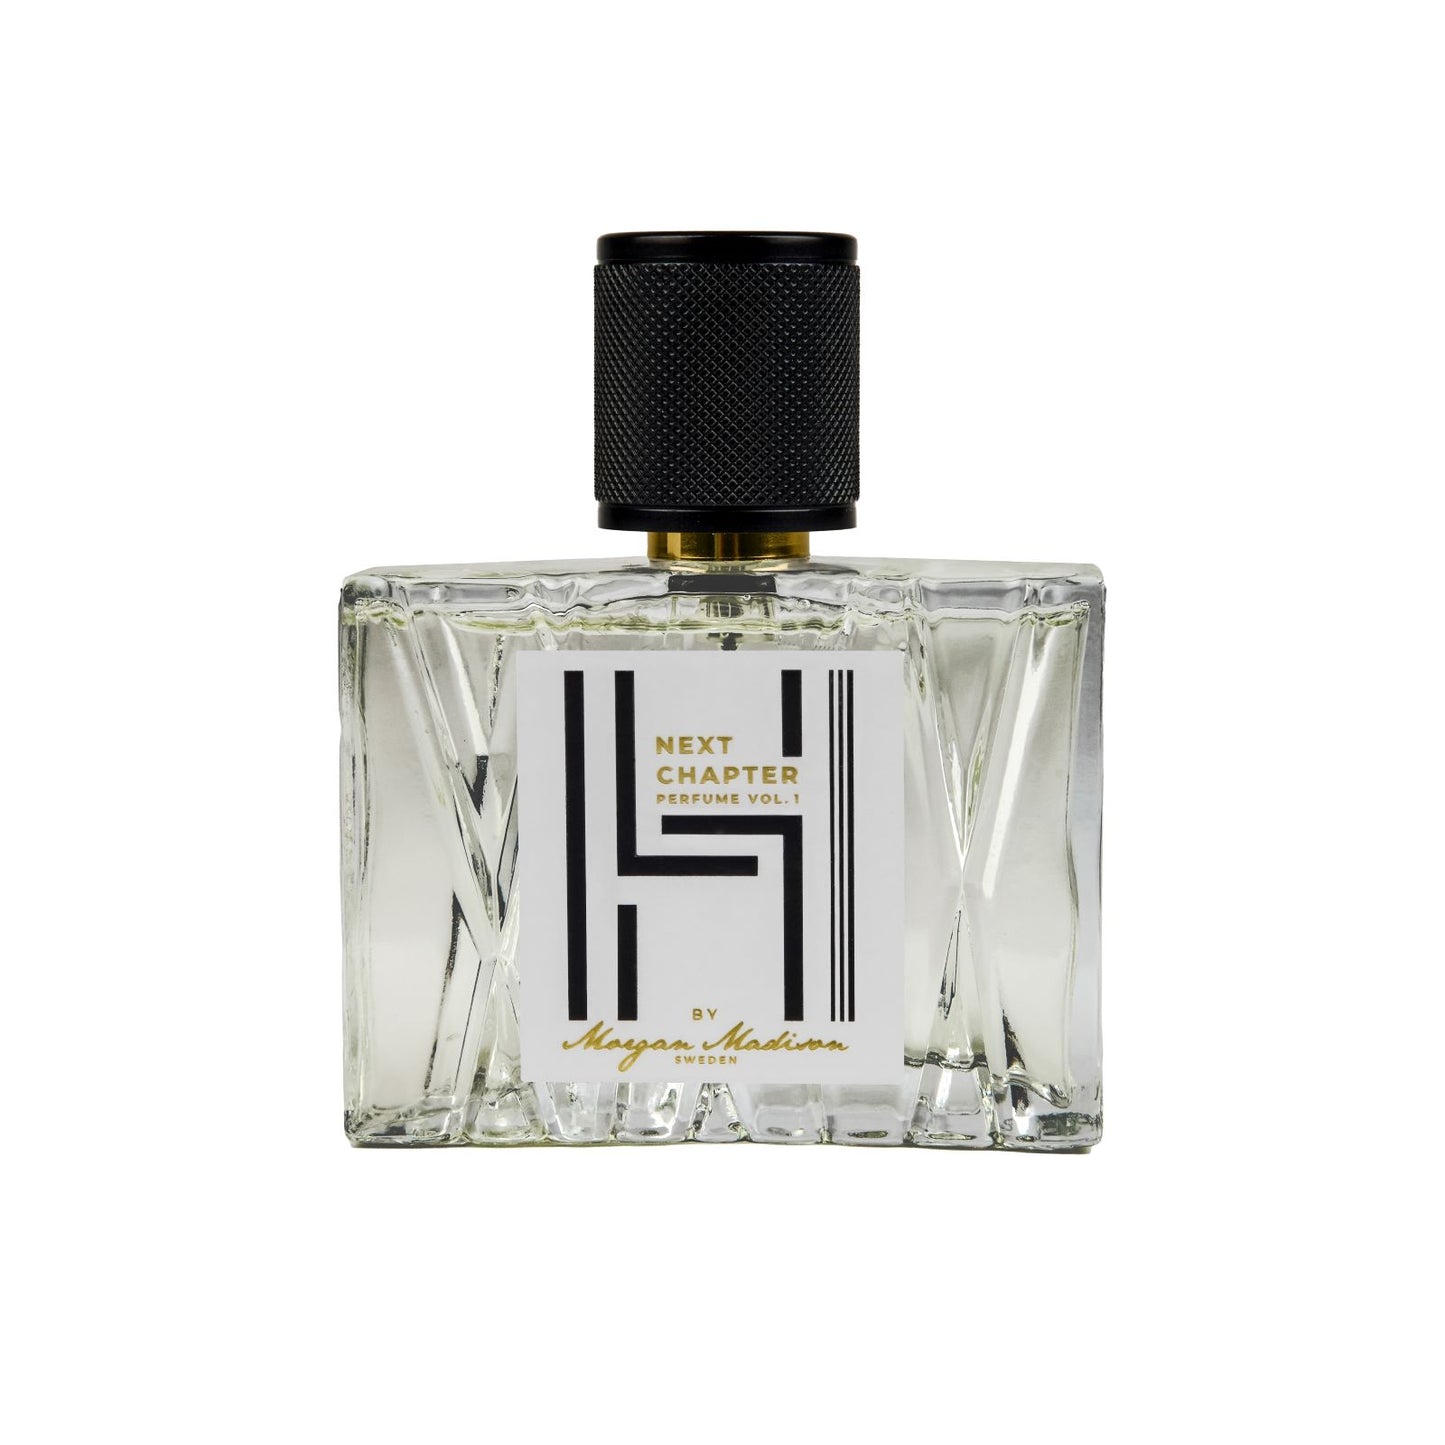 Henrik Lundqvist Next Chapter Vol. 1 Perfume